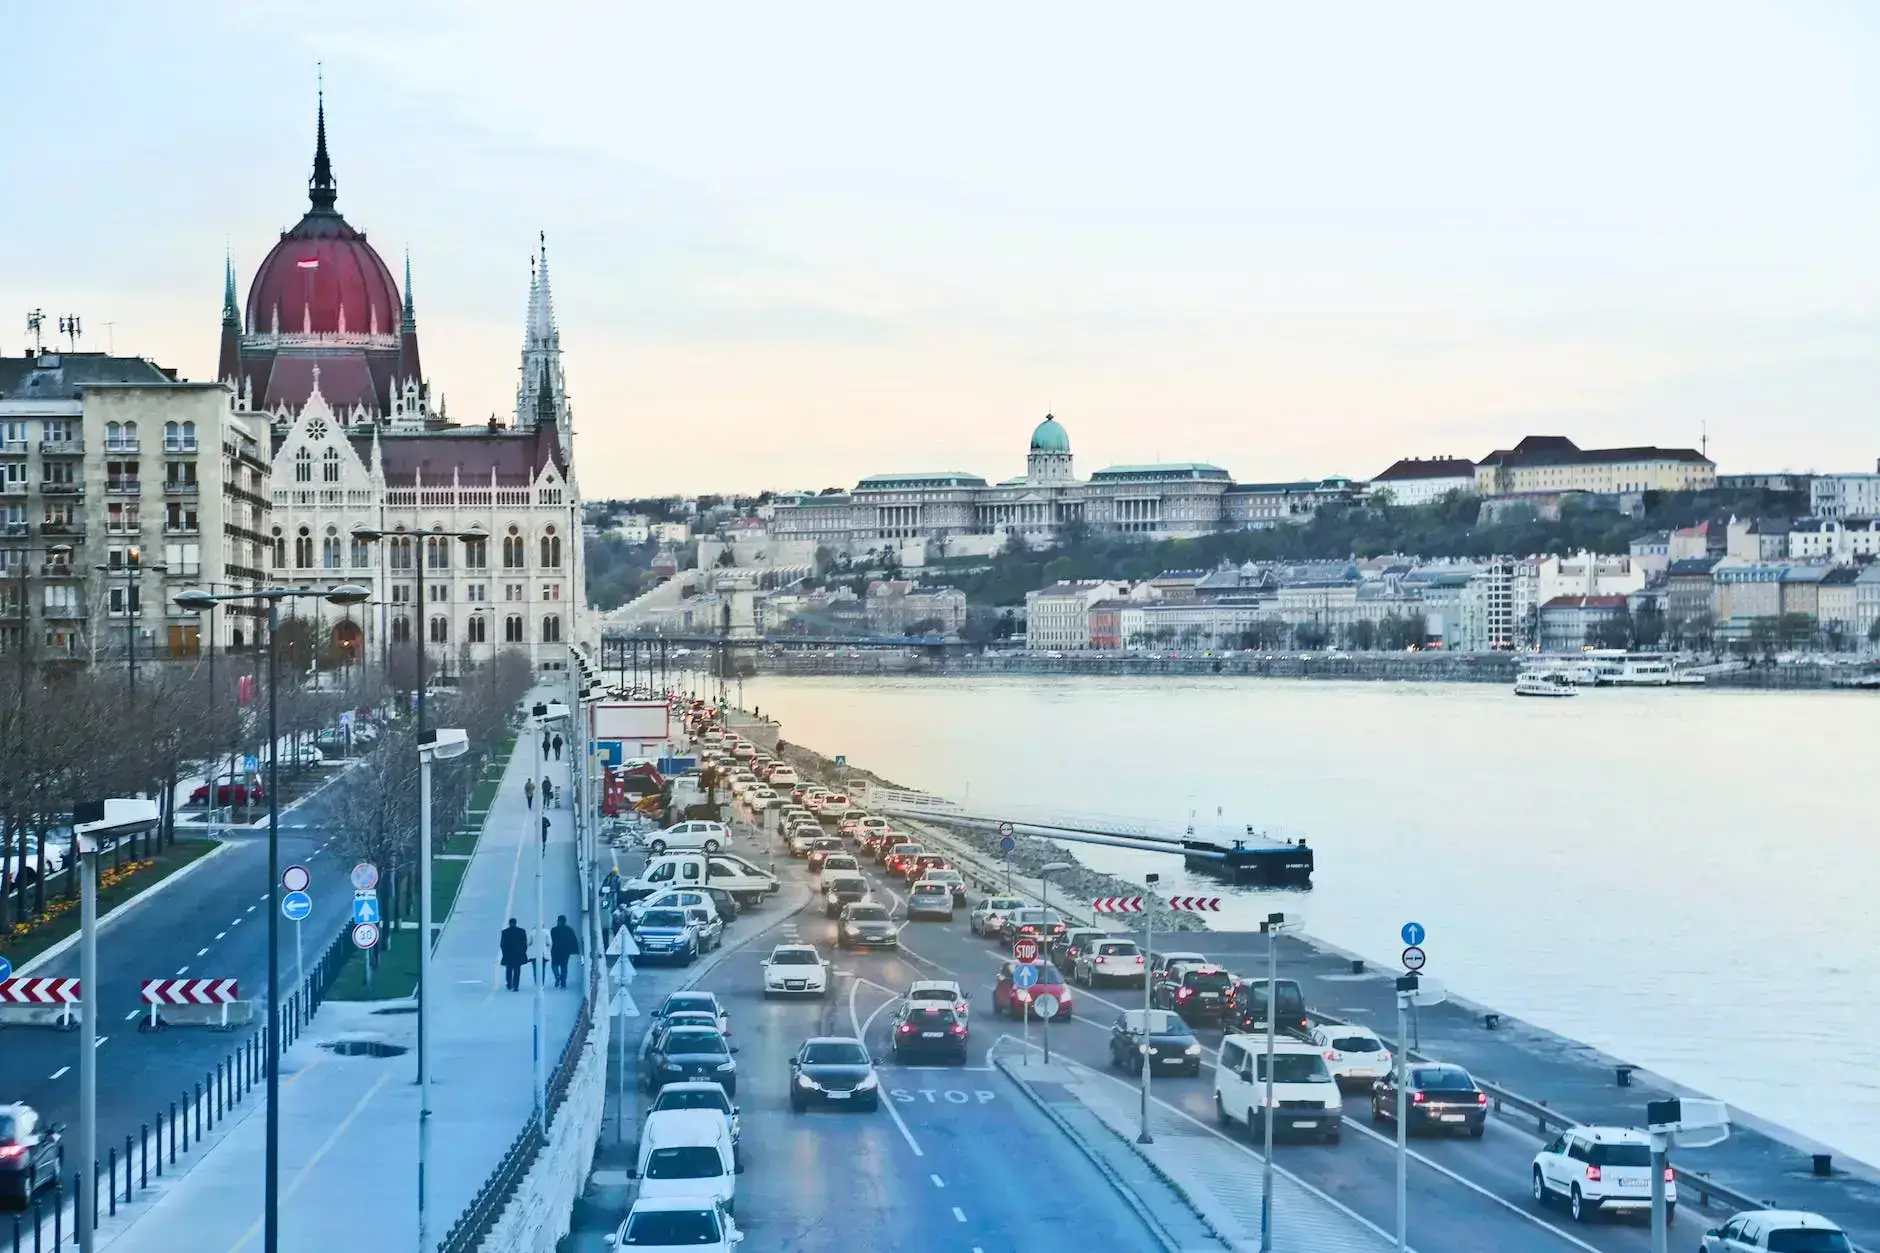 Magyar binieta - Επιλογές ταξιδιού στην Ουγγαρία στον αυτοκινητόδρομο